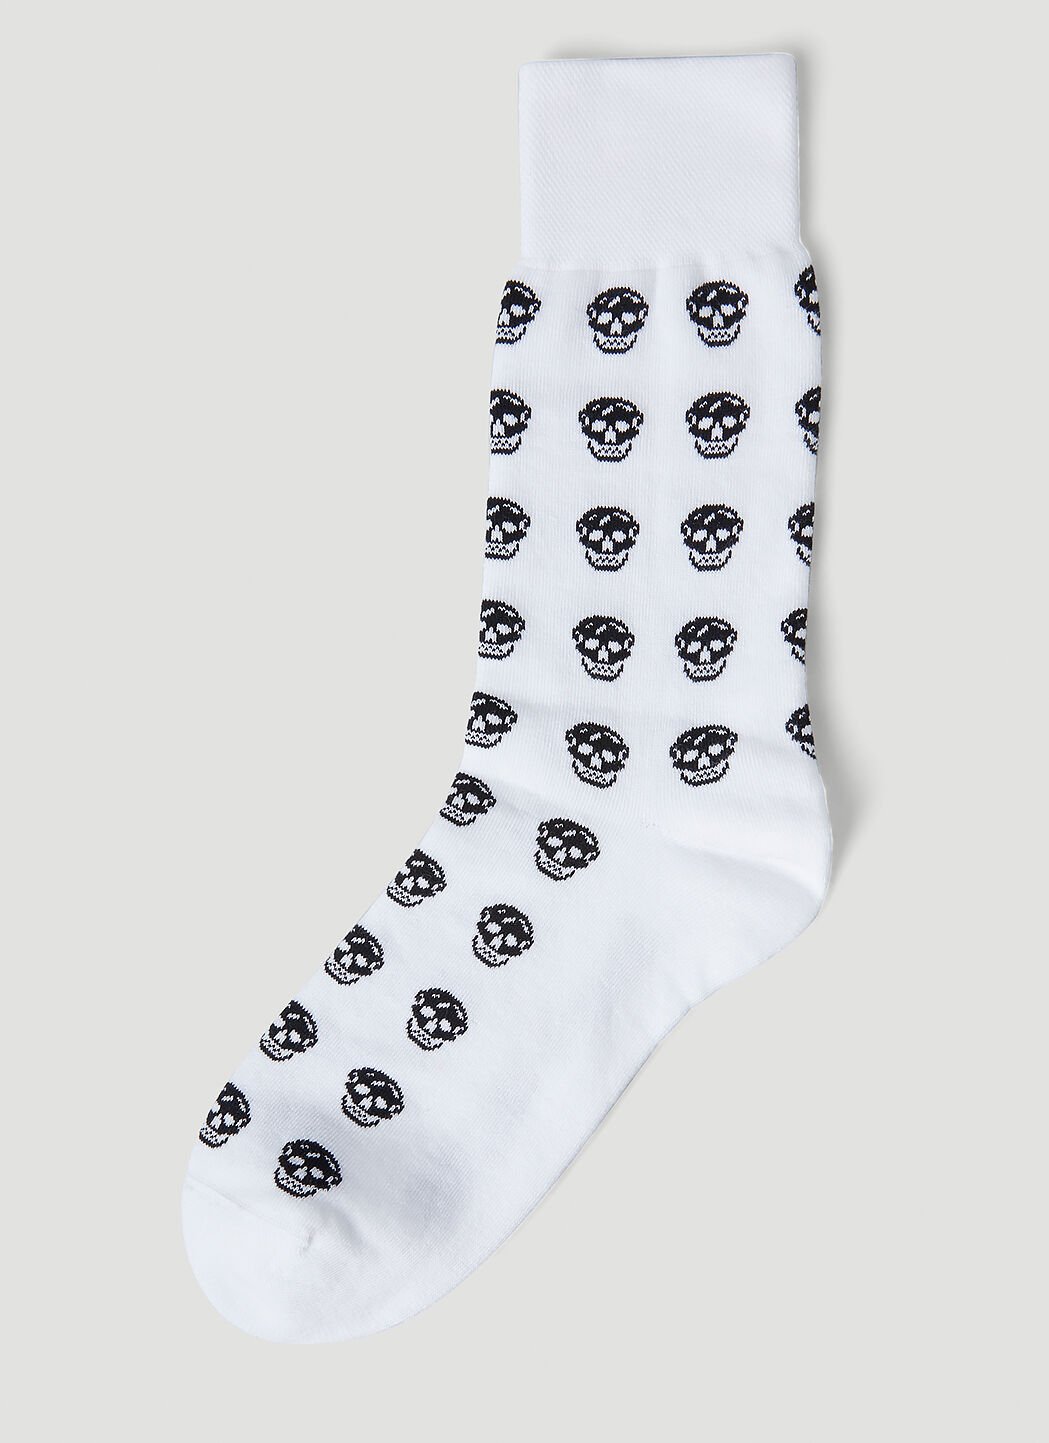 Alexander McQueen Skull Motif Socks White amq0149025